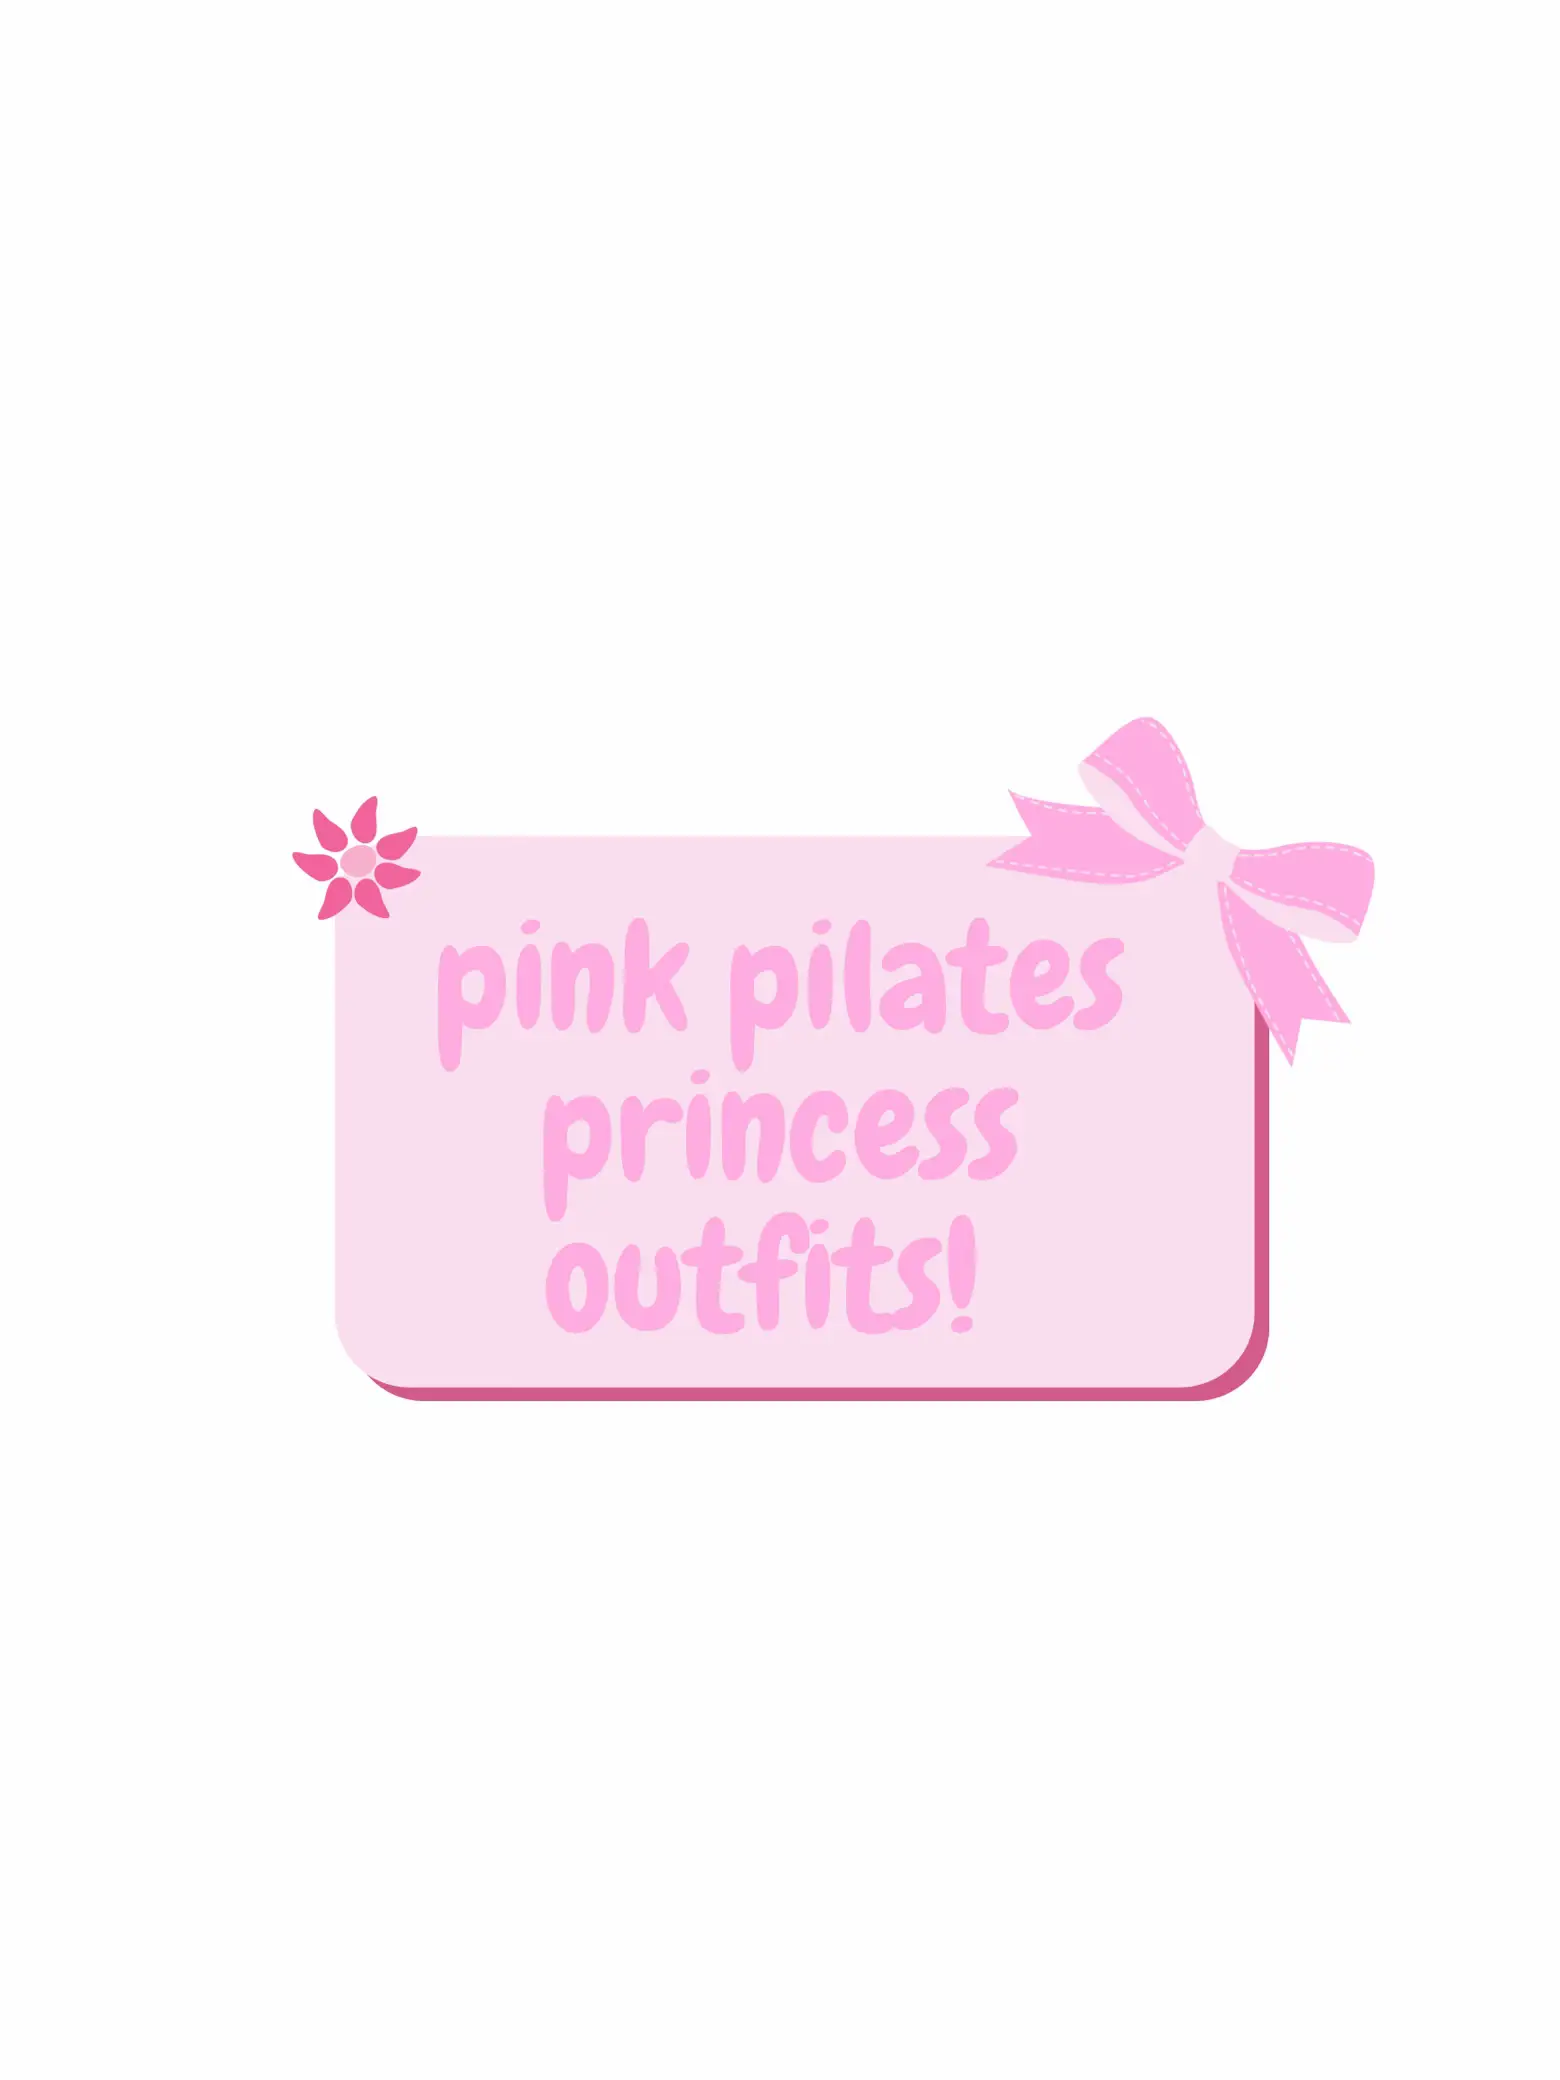 Pink Pilates Princess (Girly Workout) Clothing Haul 